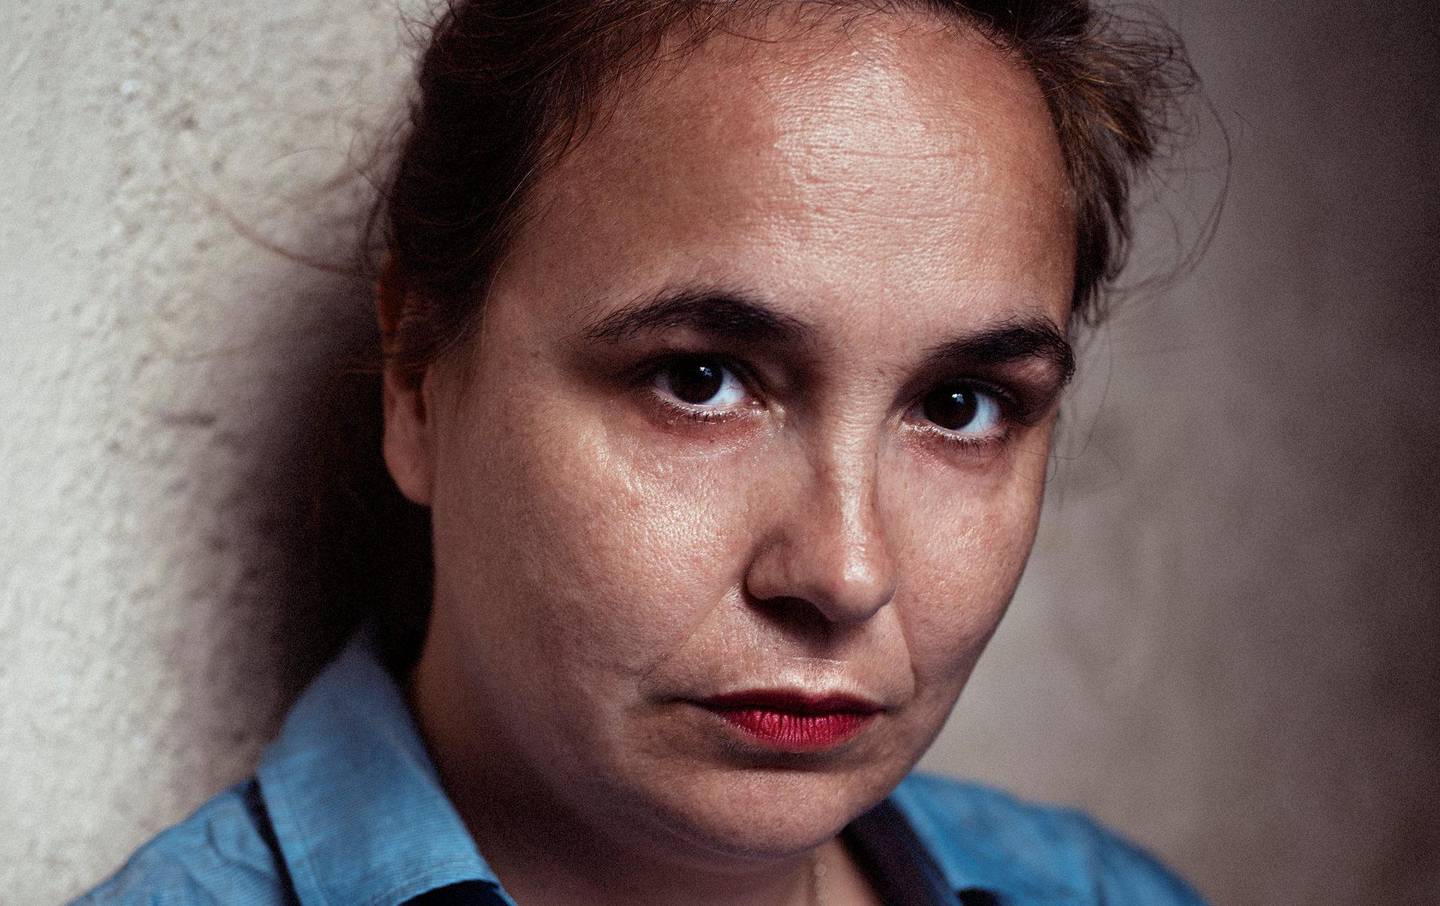 Den spanske fotografen Cristina de Middel står bak årets nobelprisutstilling.